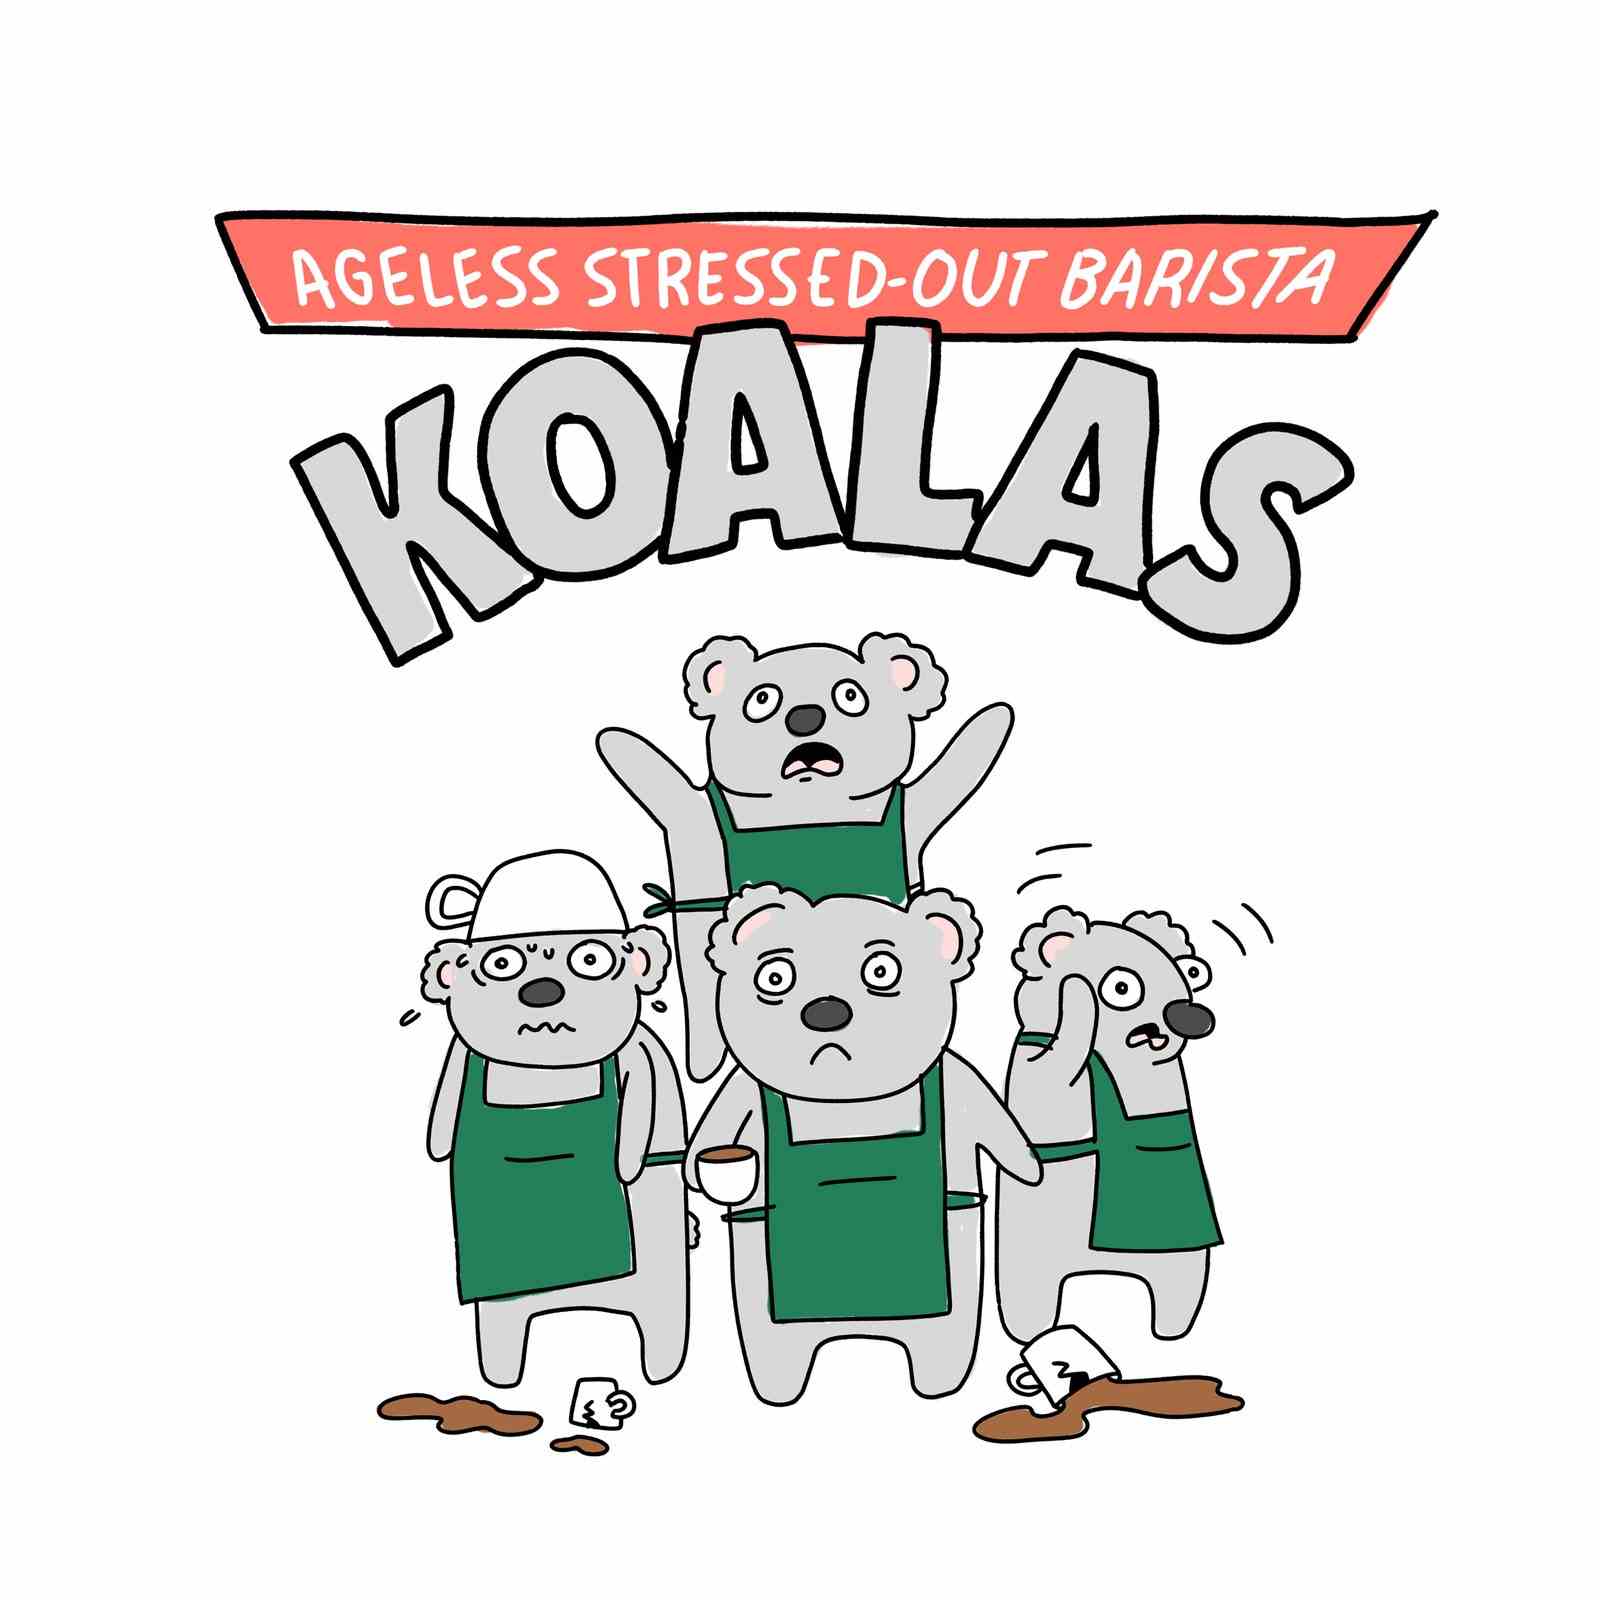 Als Barista verkleidete Koalas.